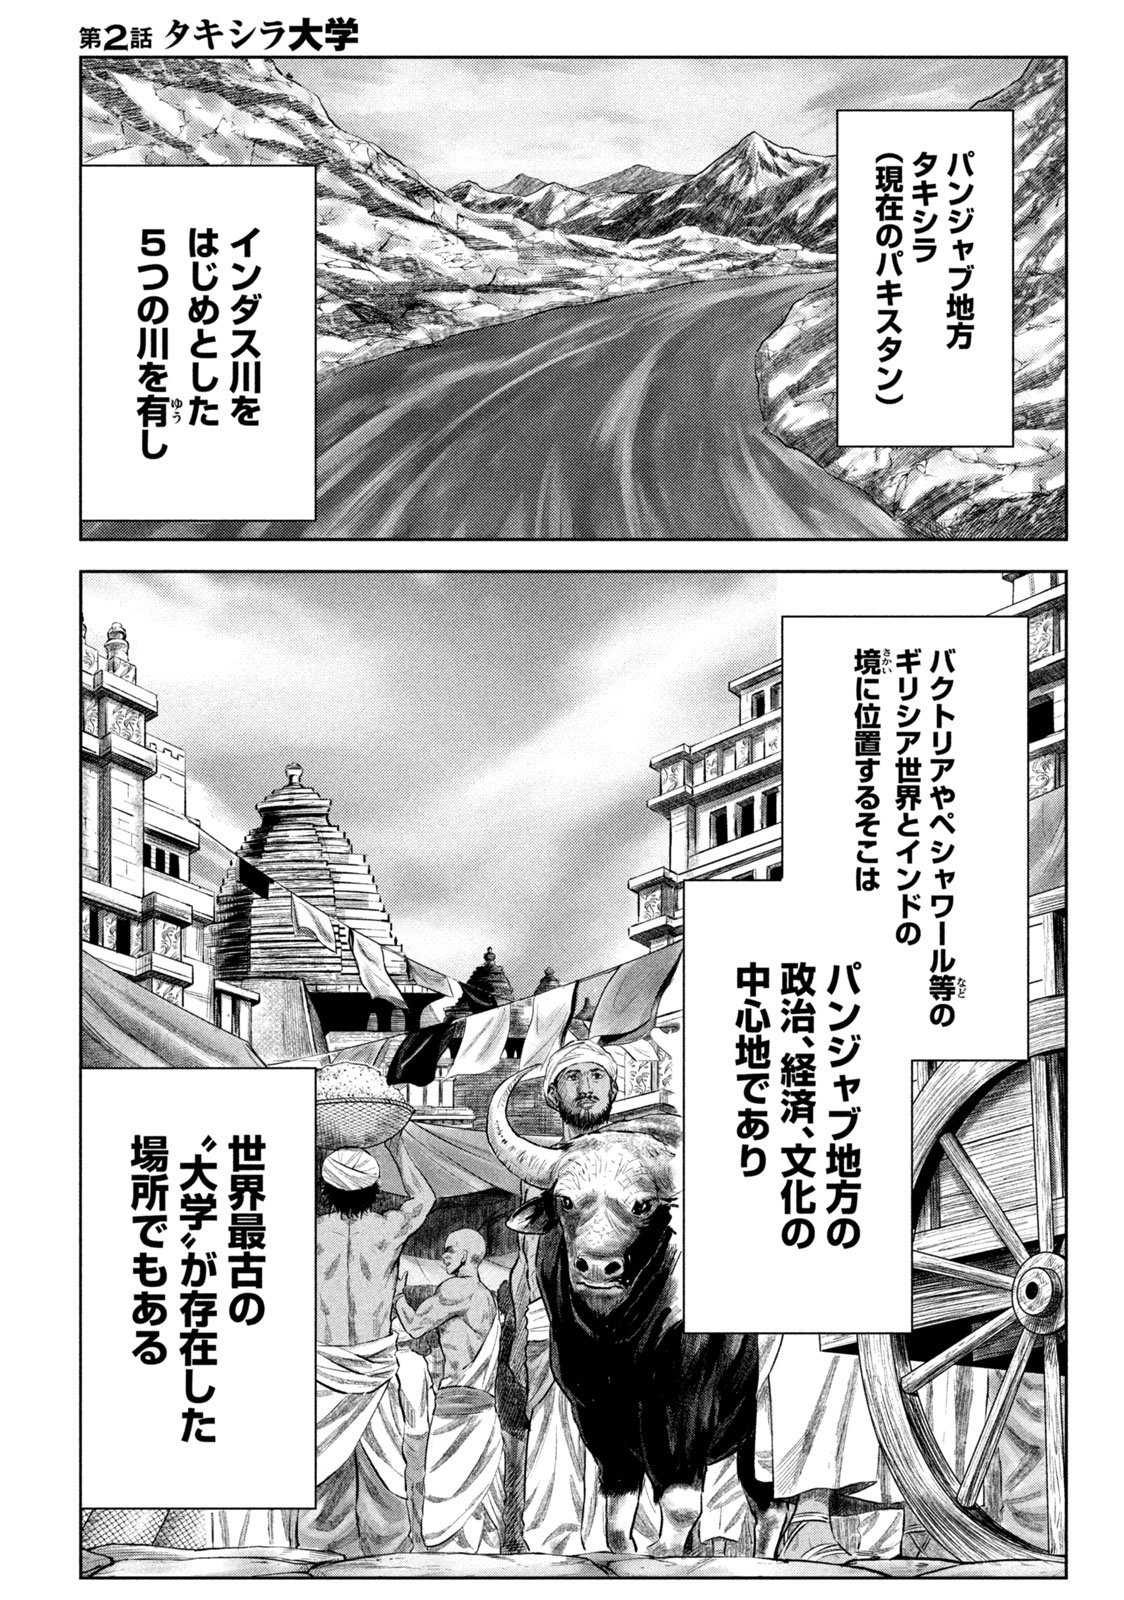 राजा ラージャ 第2.1話 - Page 4